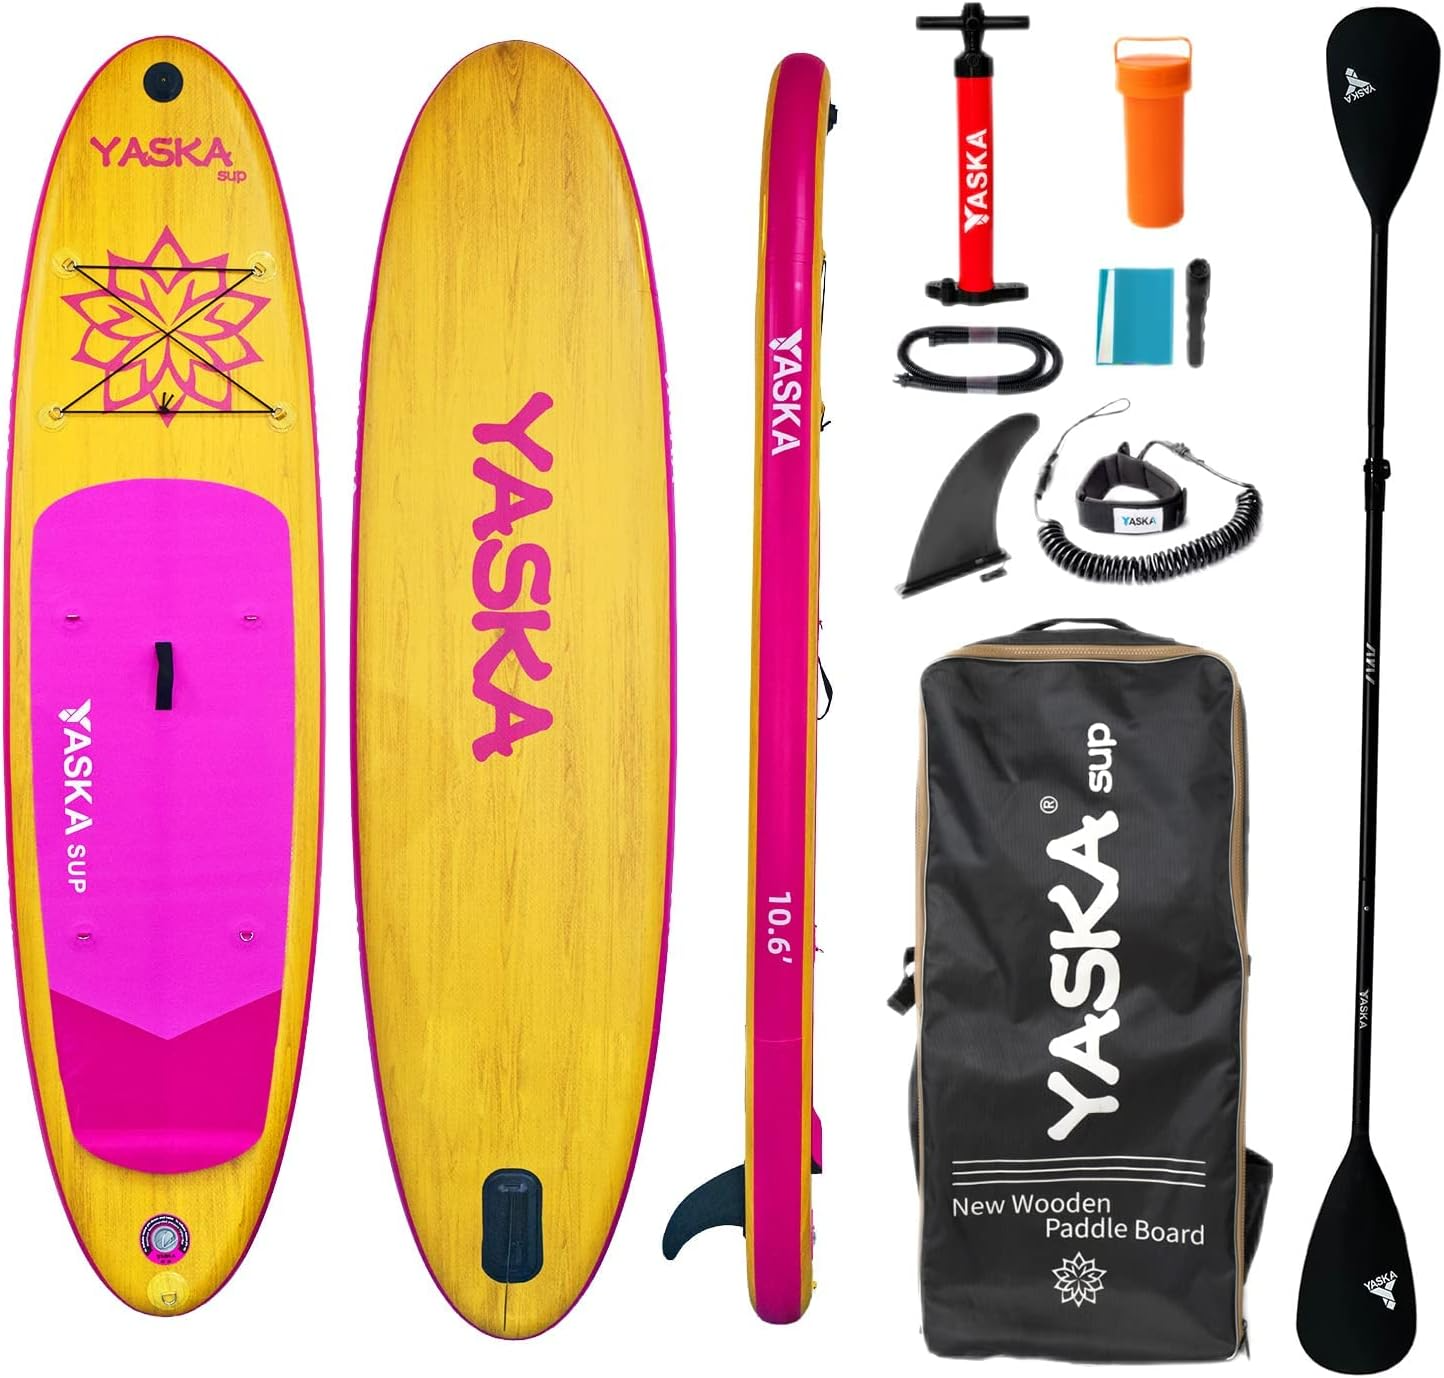  YASKA YASKA Kids Paddle Board Inflatable - Paddle